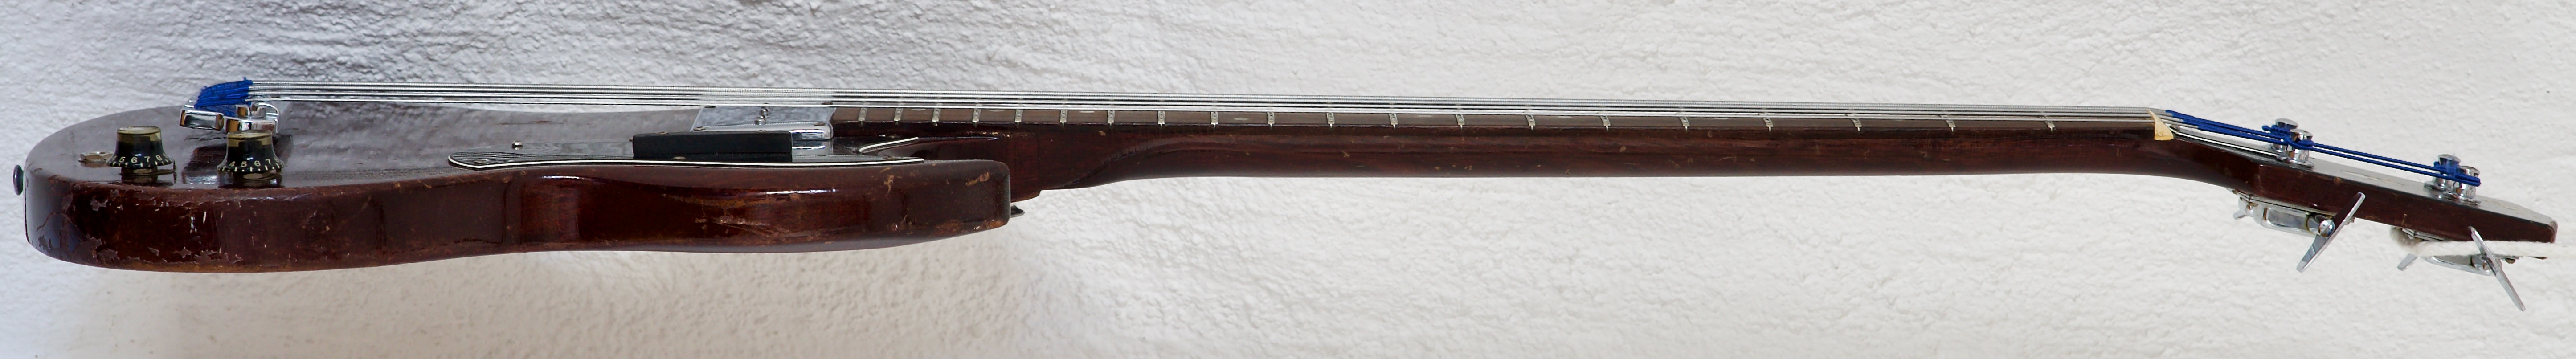 1967 Gibson EB-0